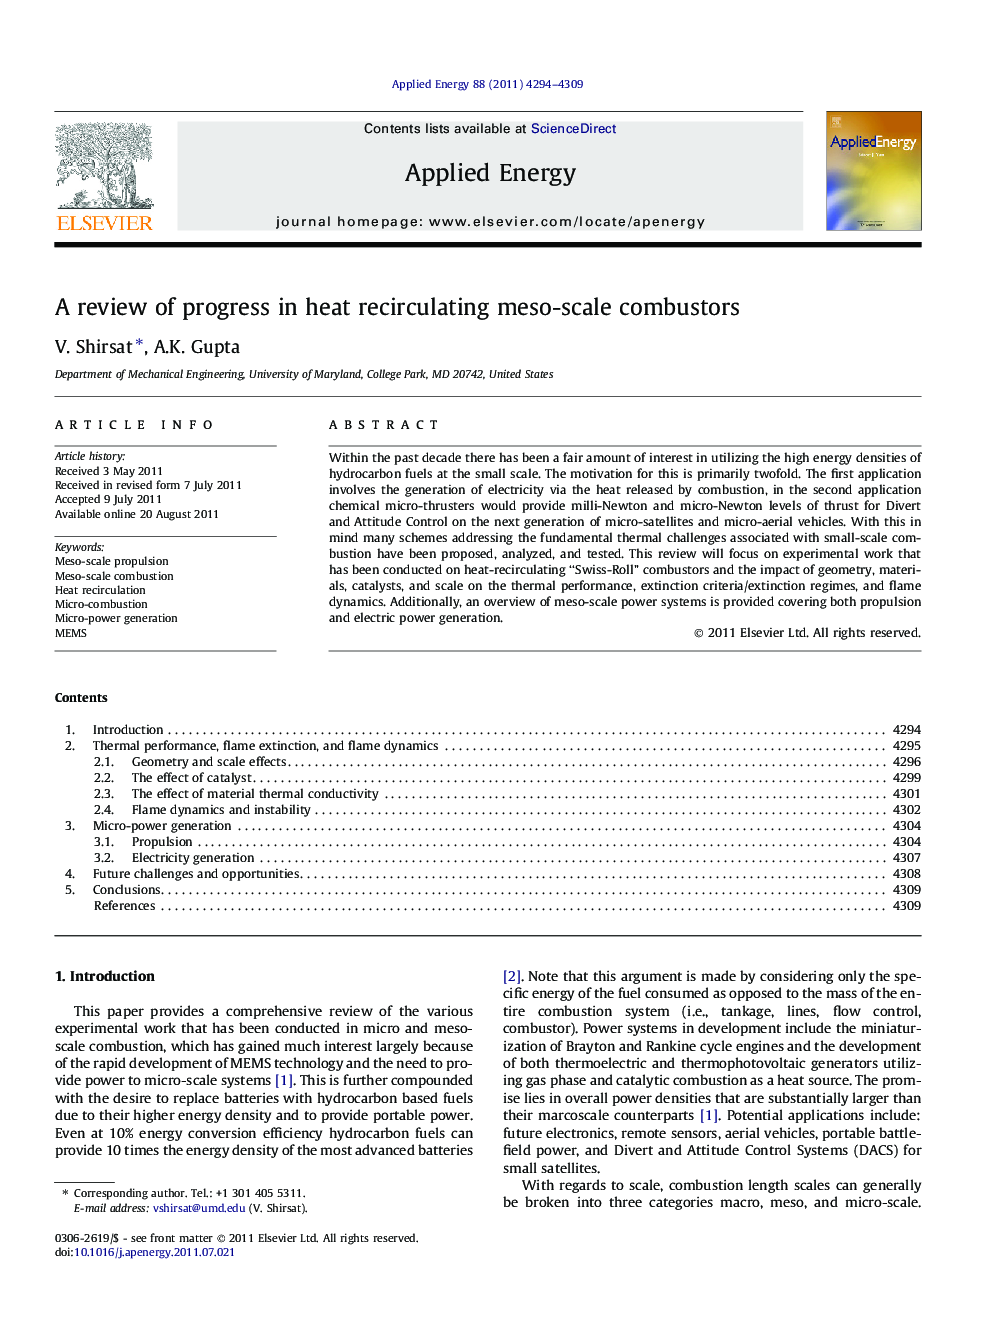 A review of progress in heat recirculating meso-scale combustors